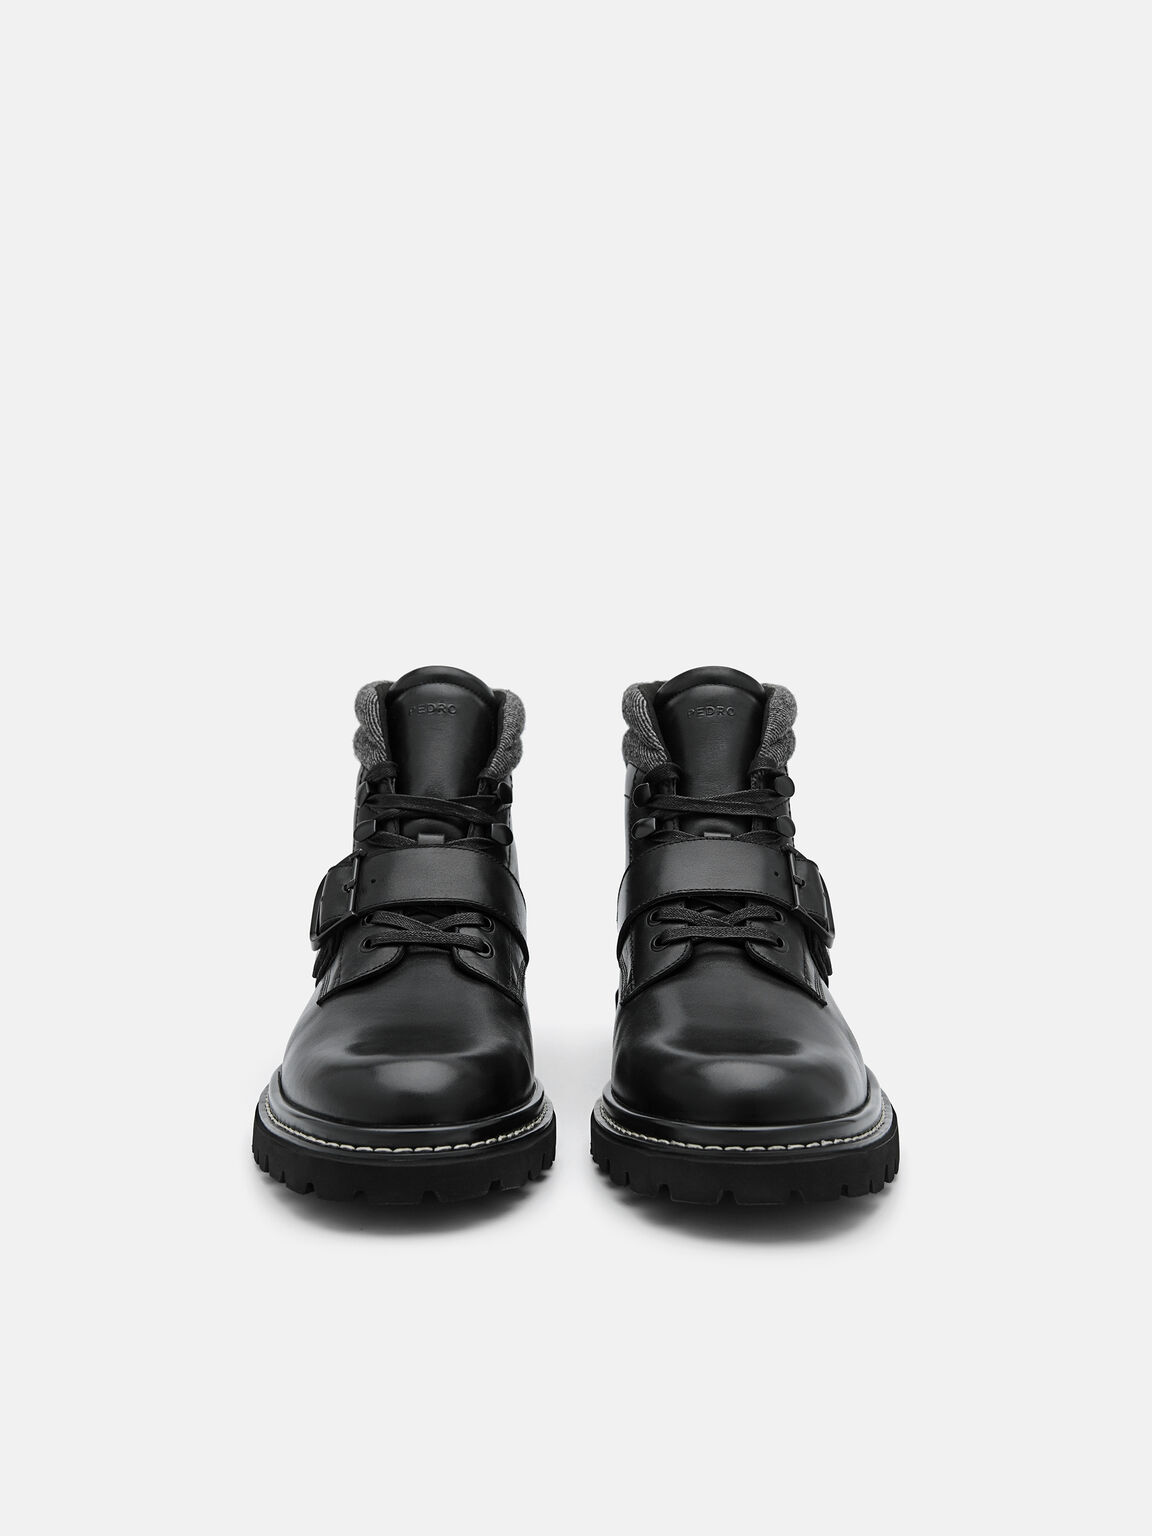 Helix Leather Boots, Black, hi-res